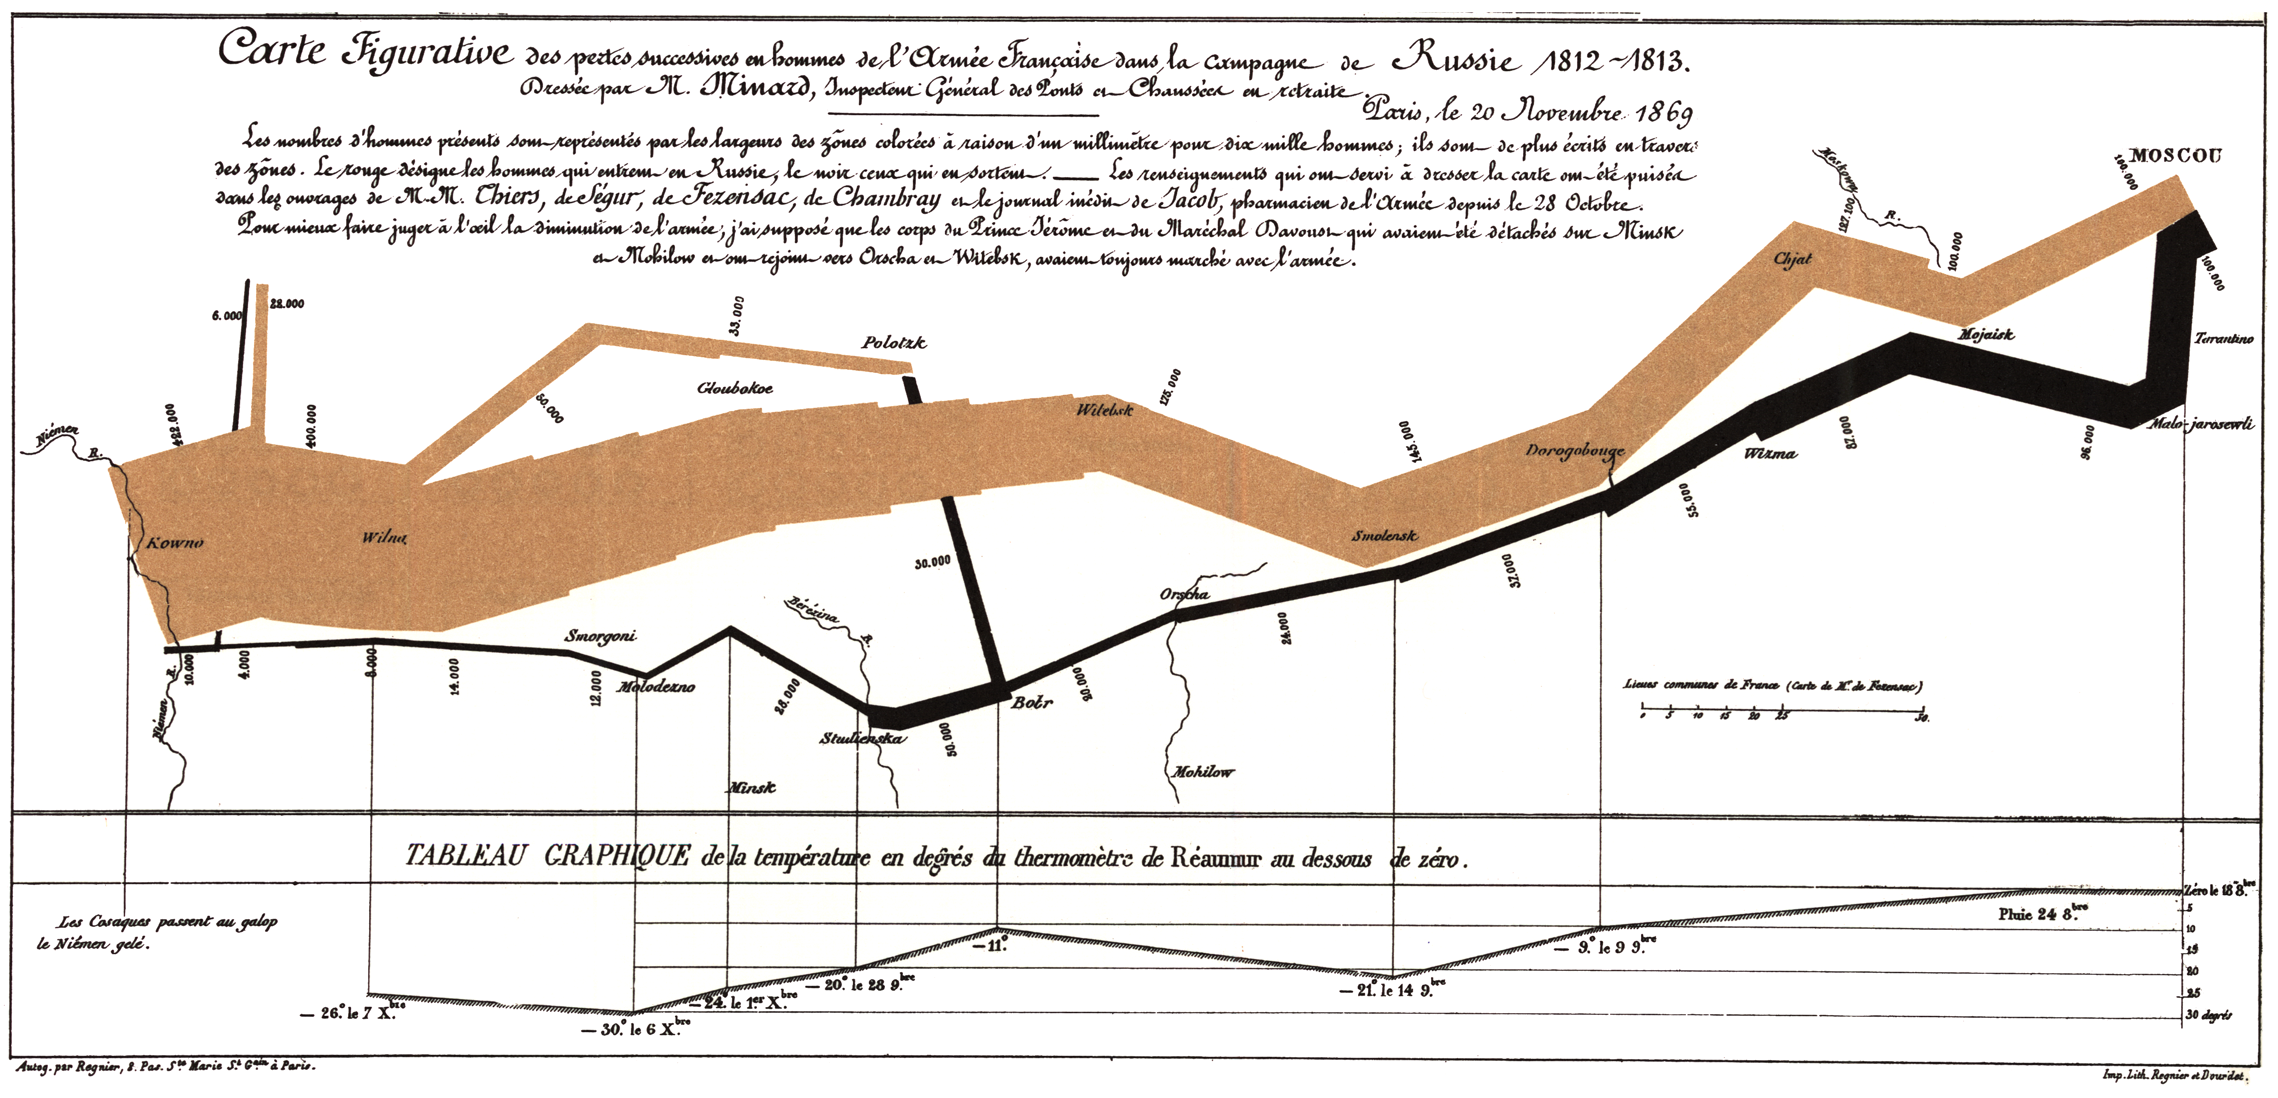 Minard's Map of Napoleon's 1812 Russian Campaign